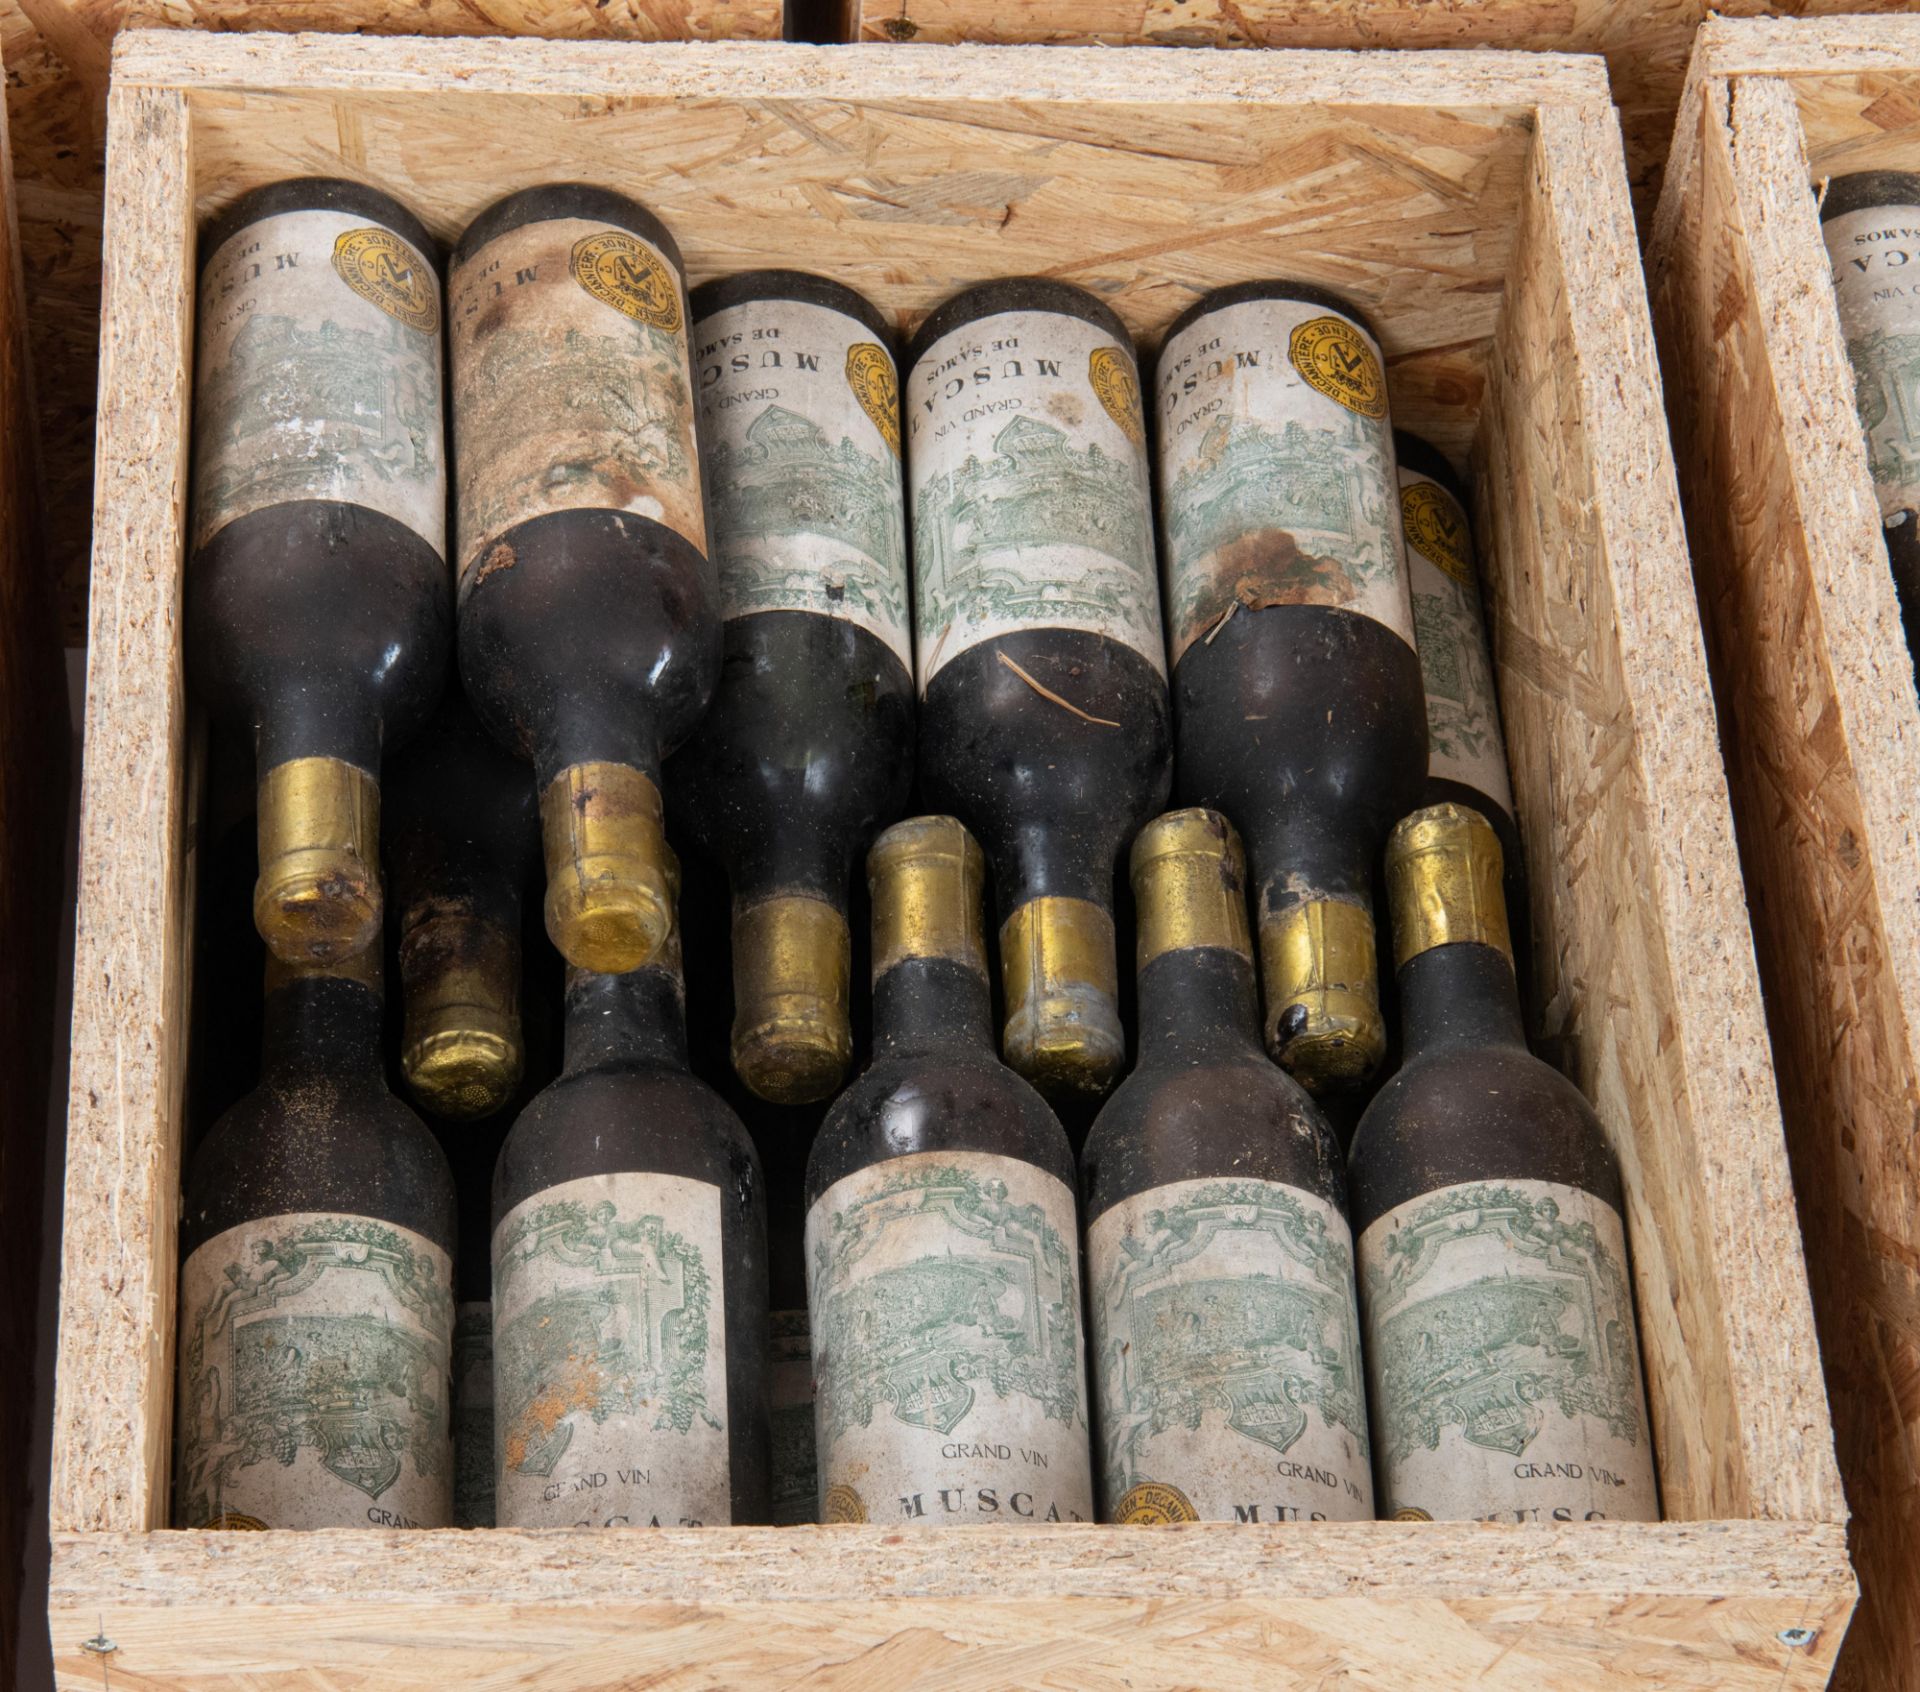 A series of J. Vandermeulen - DecanniŠre (Ostend - Belgium) bottled wines, 17 standard bottles Musca - Bild 7 aus 13